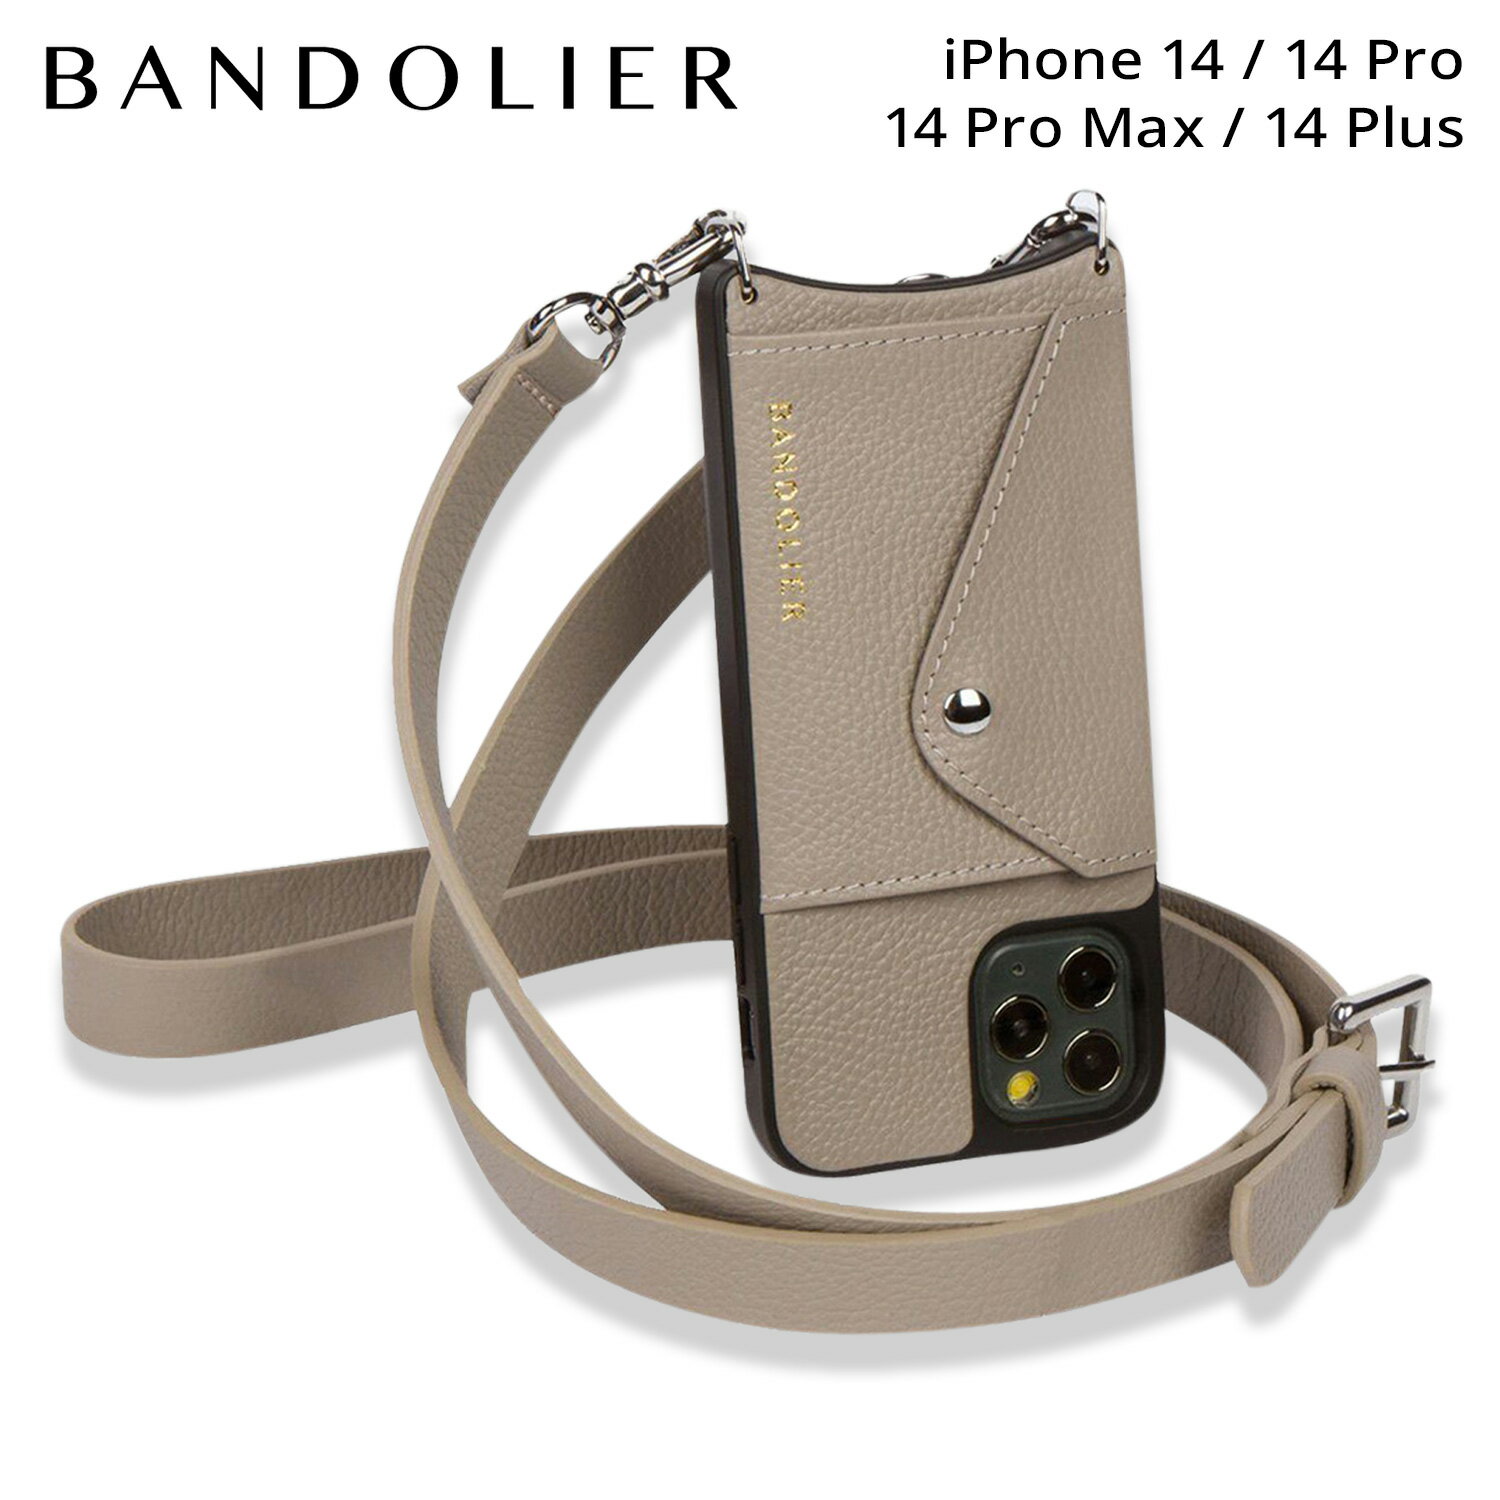 BANDOLIER バンドリヤー iPhone 14 14Pro iPhone 14 Pro Max iPhone 14 Plus スマホケース スマホショルダー 携帯 アイフォン メンズ レディース HAILEY SIDE SLOT GREIGE ベージュ 14HAI